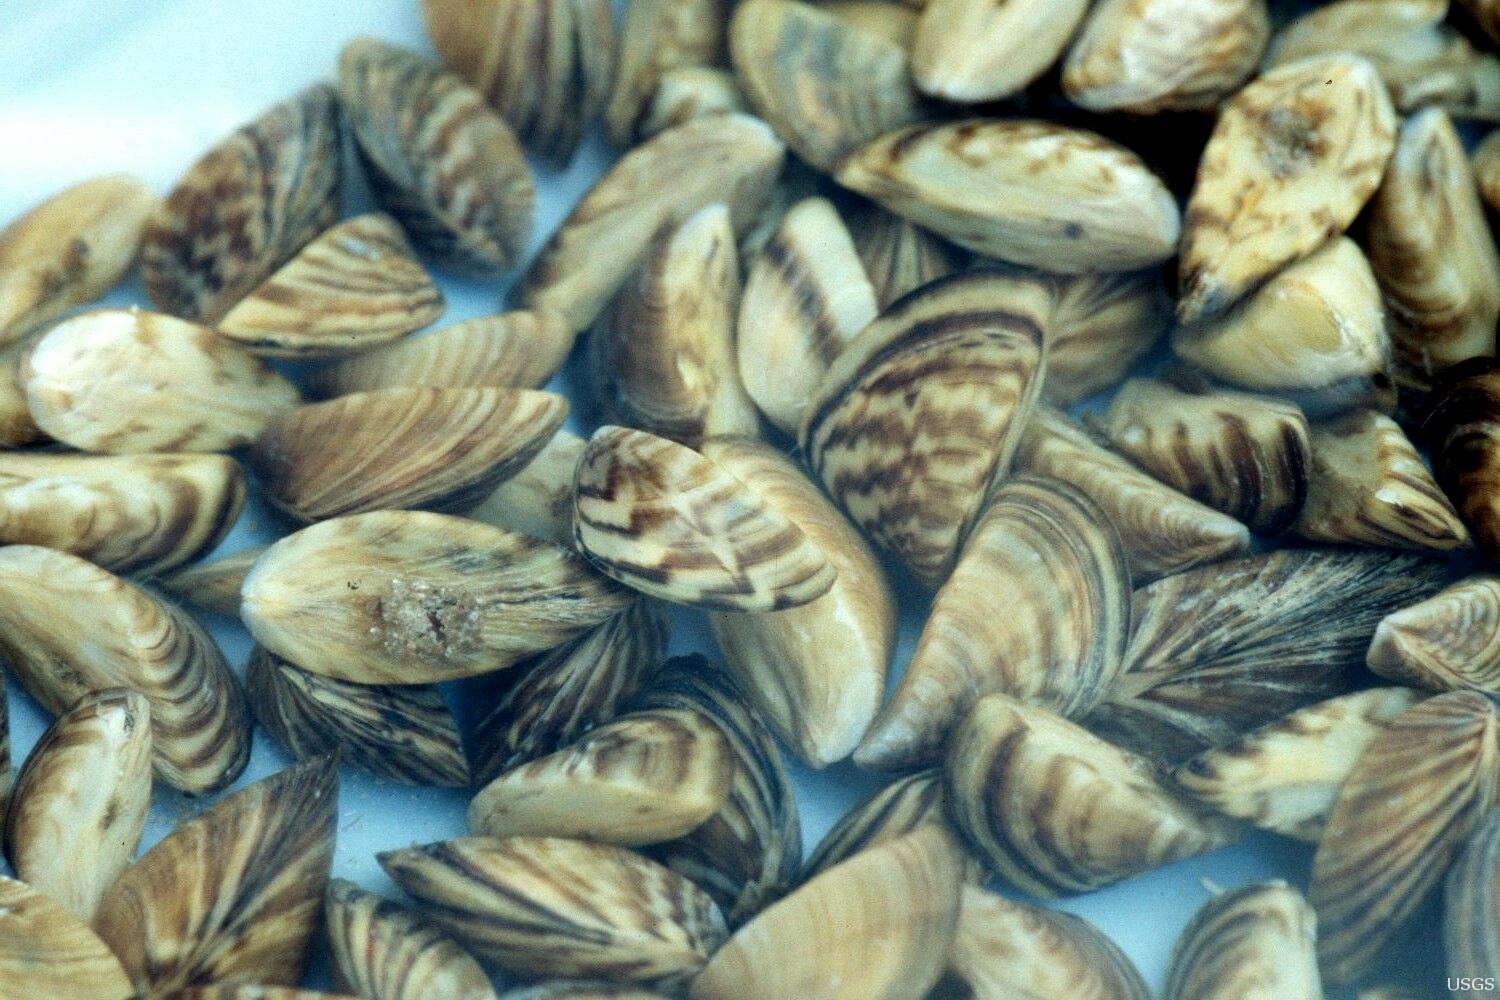 UPDATE to Consumer Alert: Aquarium Moss Balls May Contain Invasive Zebra  Mussels - N.C. Wildlife Resources Commission